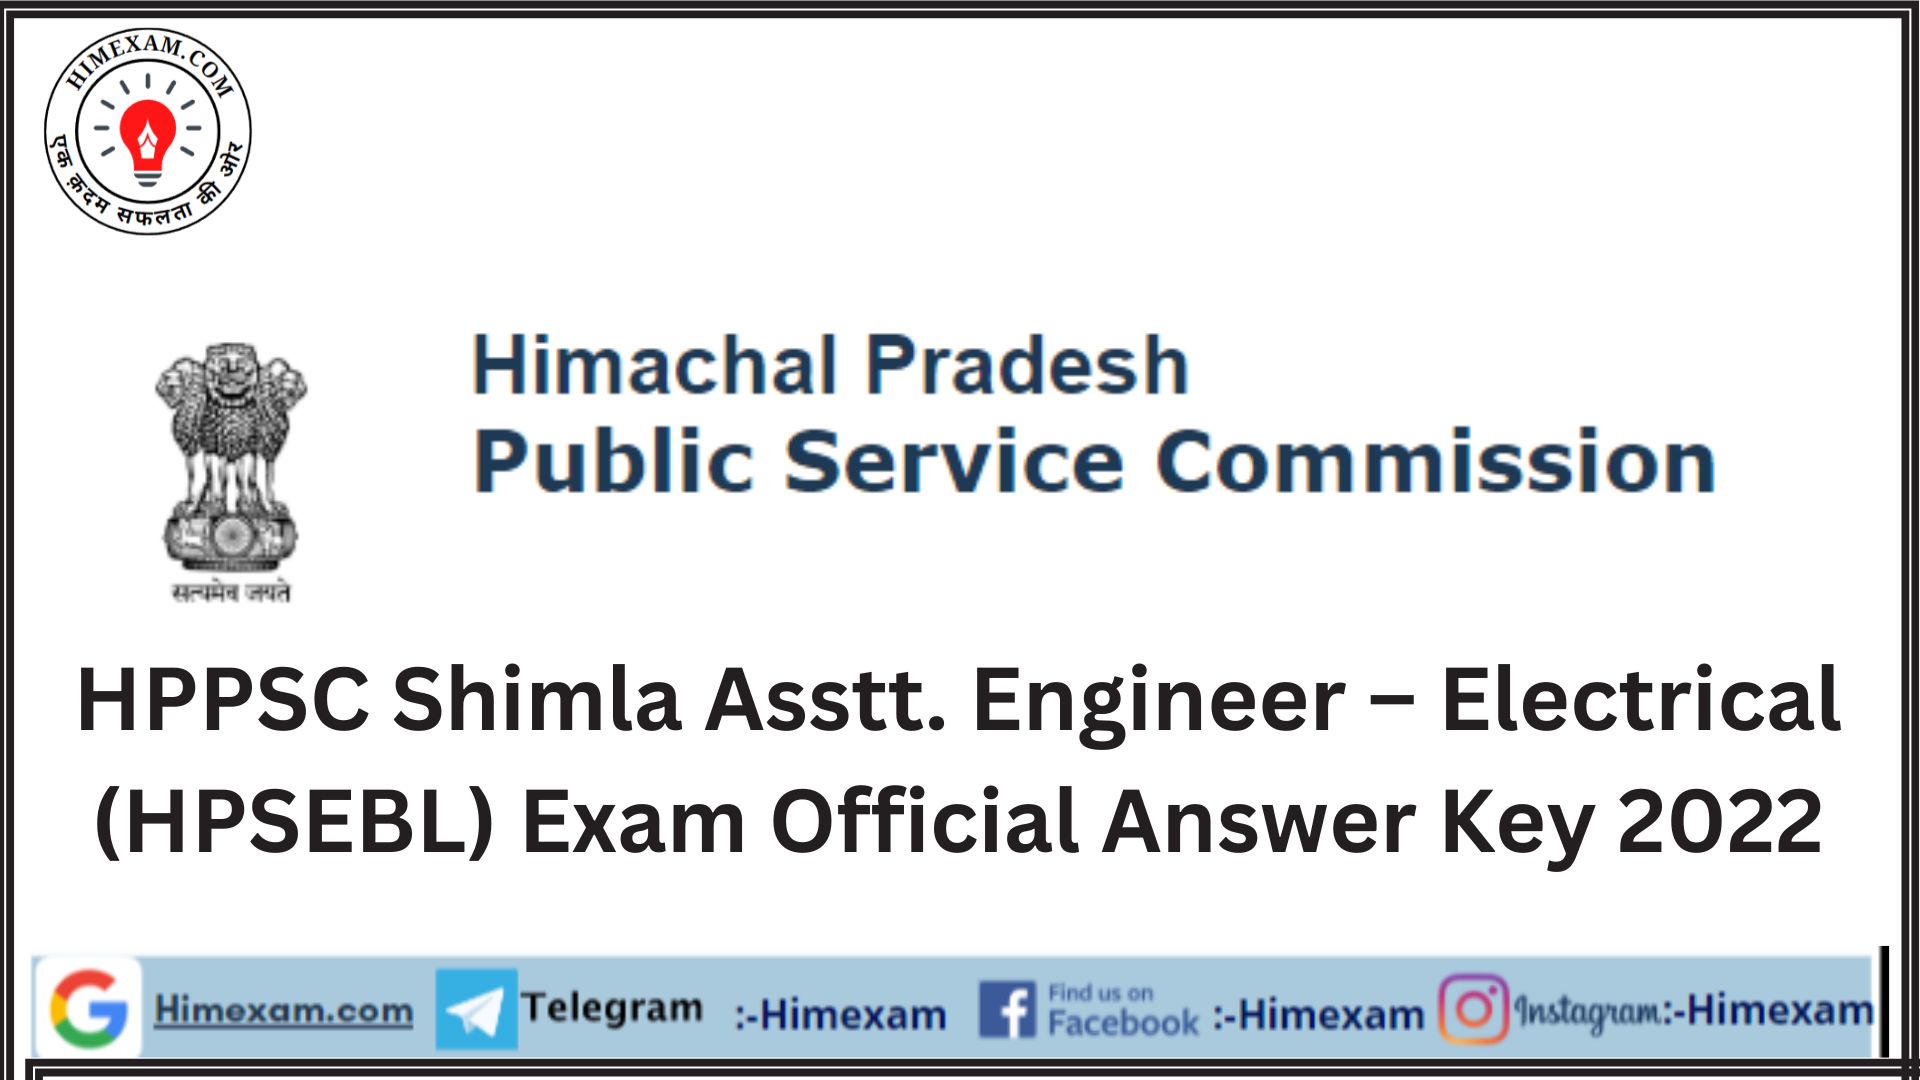 HPPSC Shimla Asstt. Engineer – Electrical (HPSEBL) Exam Official Answer Key 2022